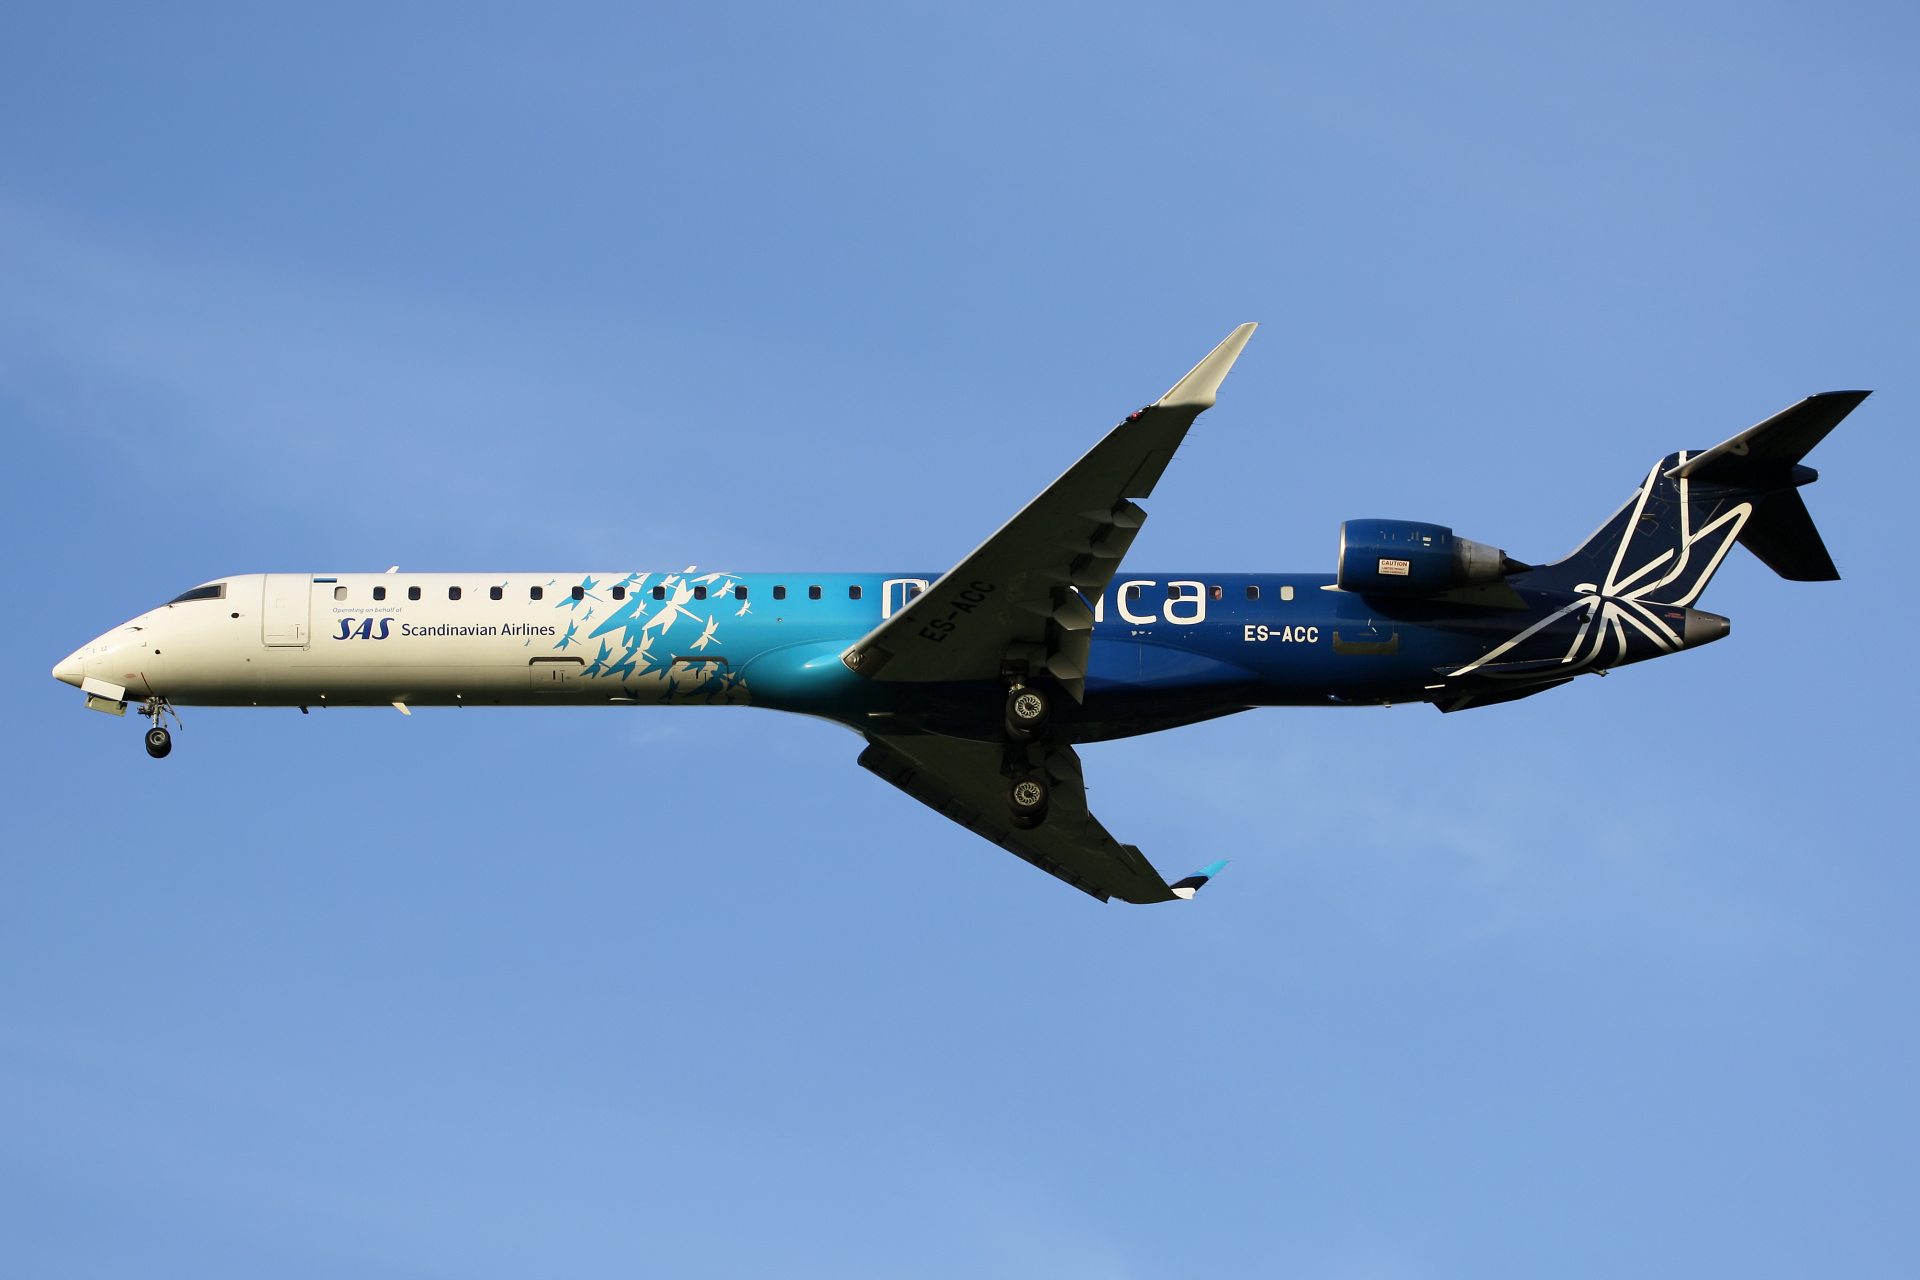 ES-ACC (SAS Scandinavian Airlines) (Aircraft » EPWA Spotting » Mitsubishi Regional Jet » CRJ-900 » Nordica)